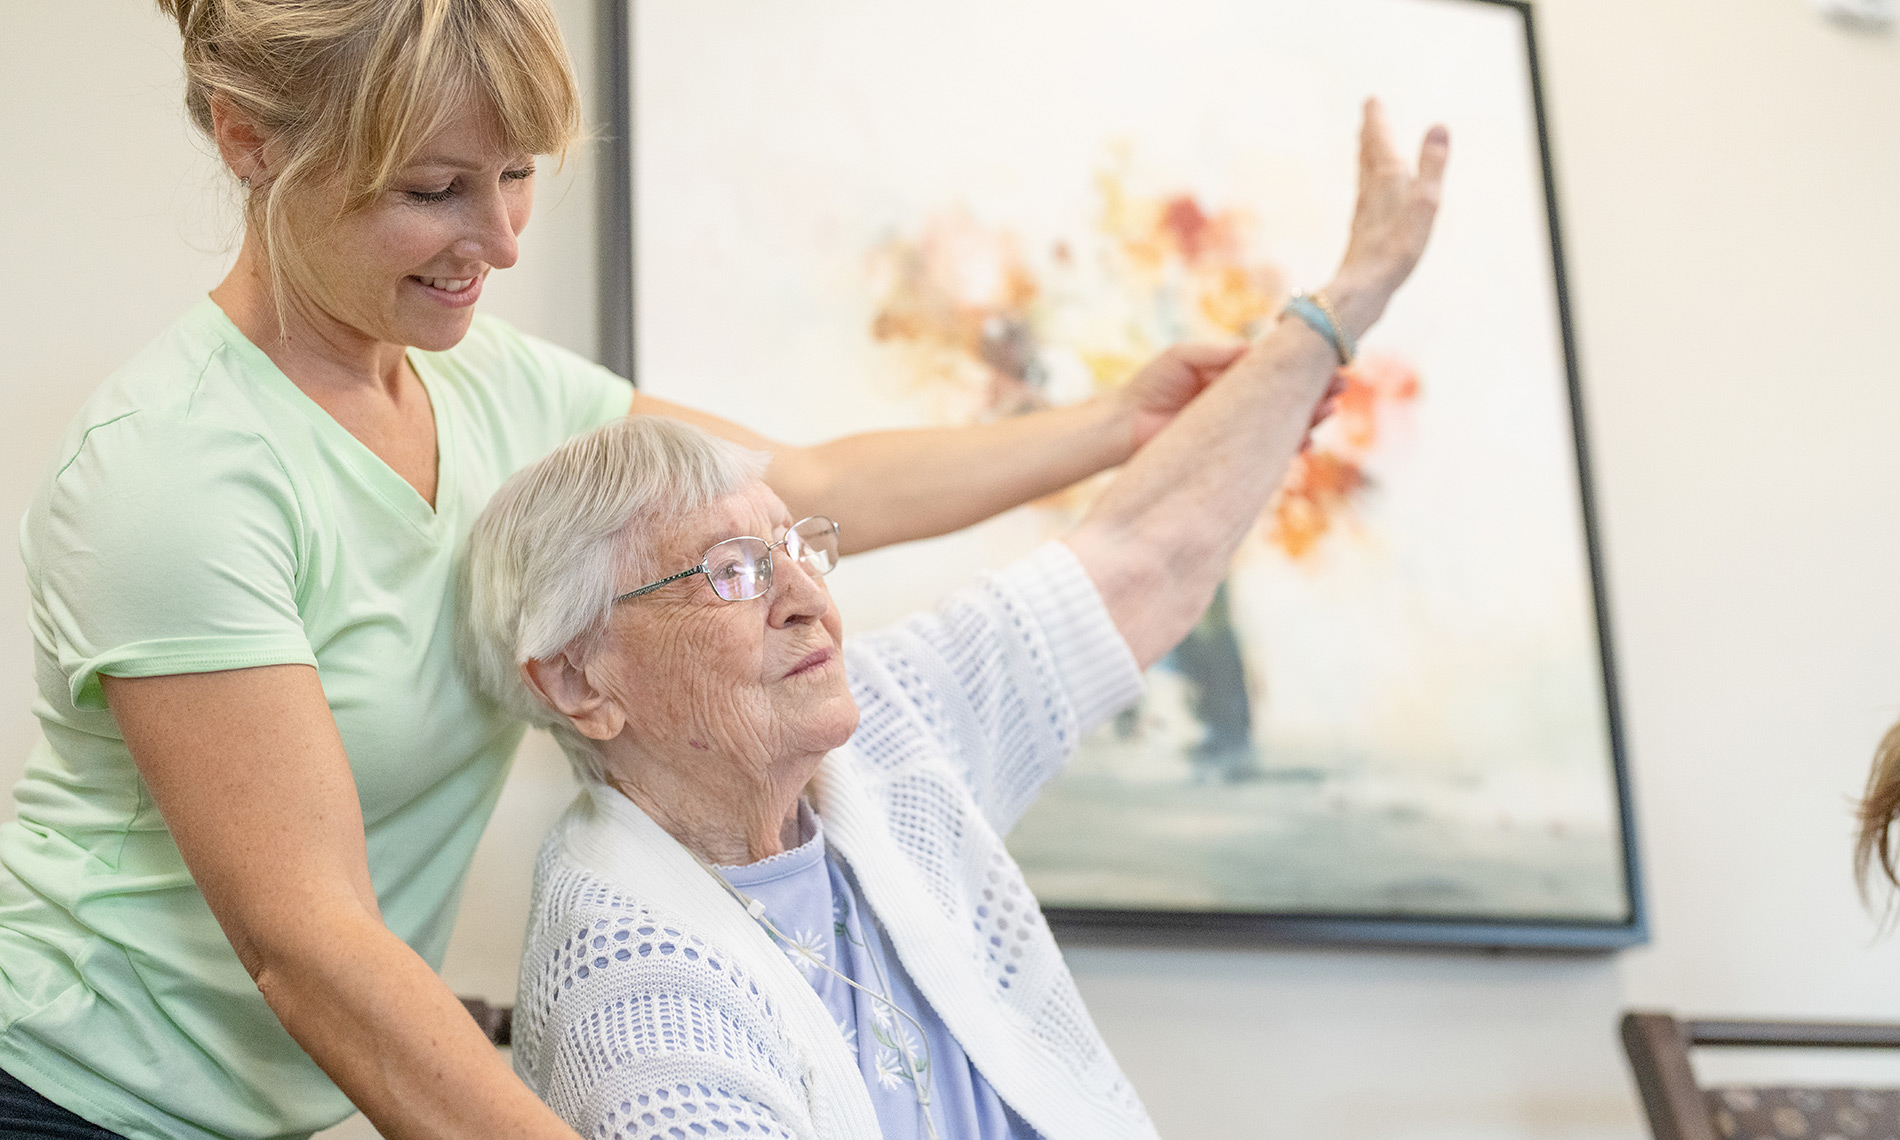 A caregiver helps a resident stretch their arm.